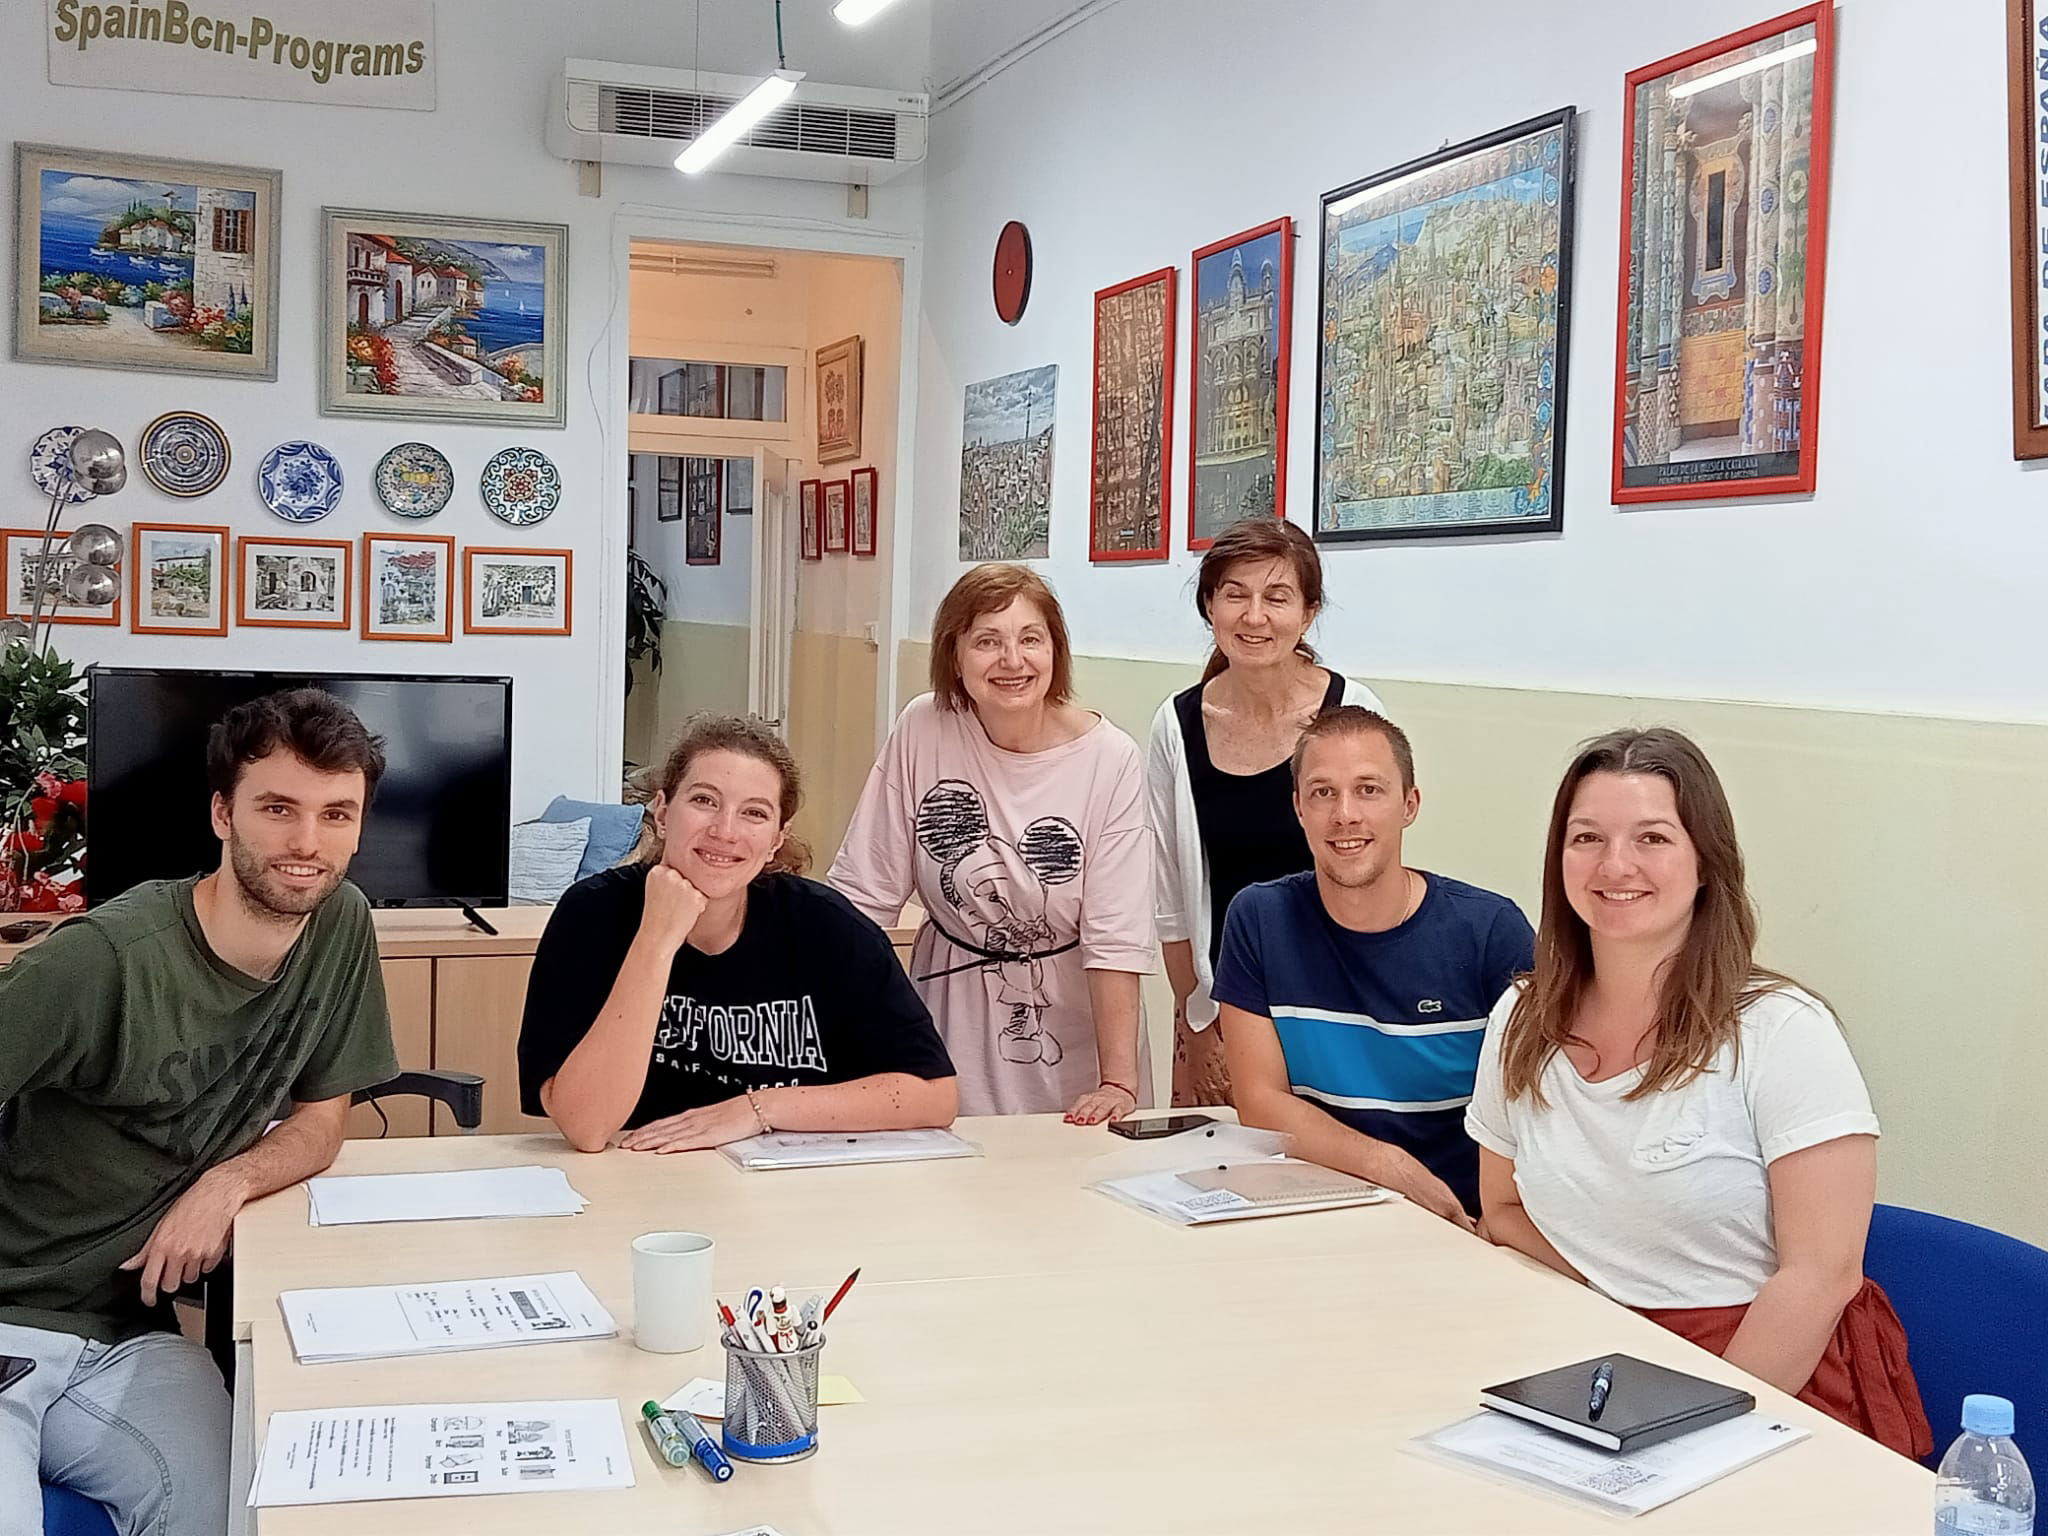 espanol Staff week Spring 2022 SpainBcn-Programs Staff training Erasmus+ KA1 Barcelona